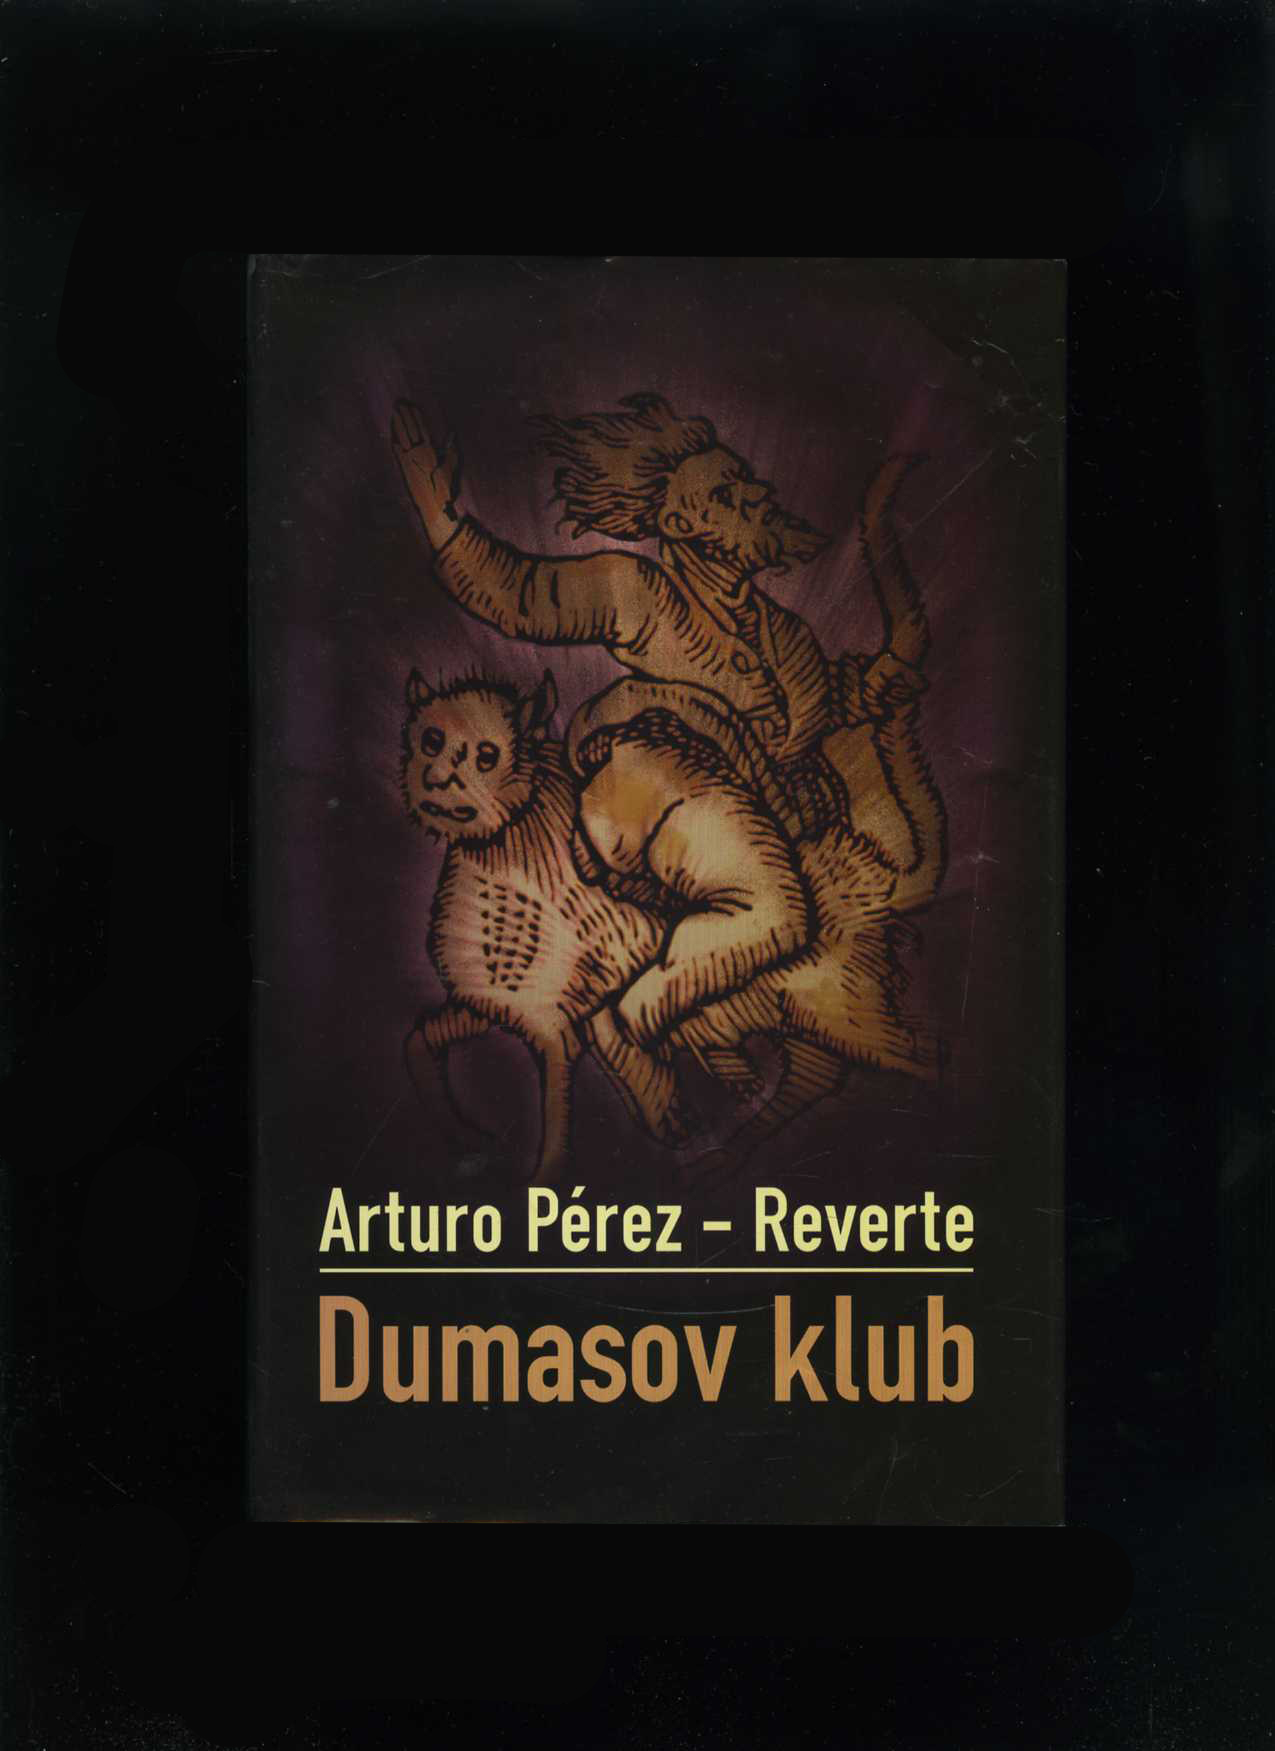 Dumasov klub (Arturo Pérez-Reverte)